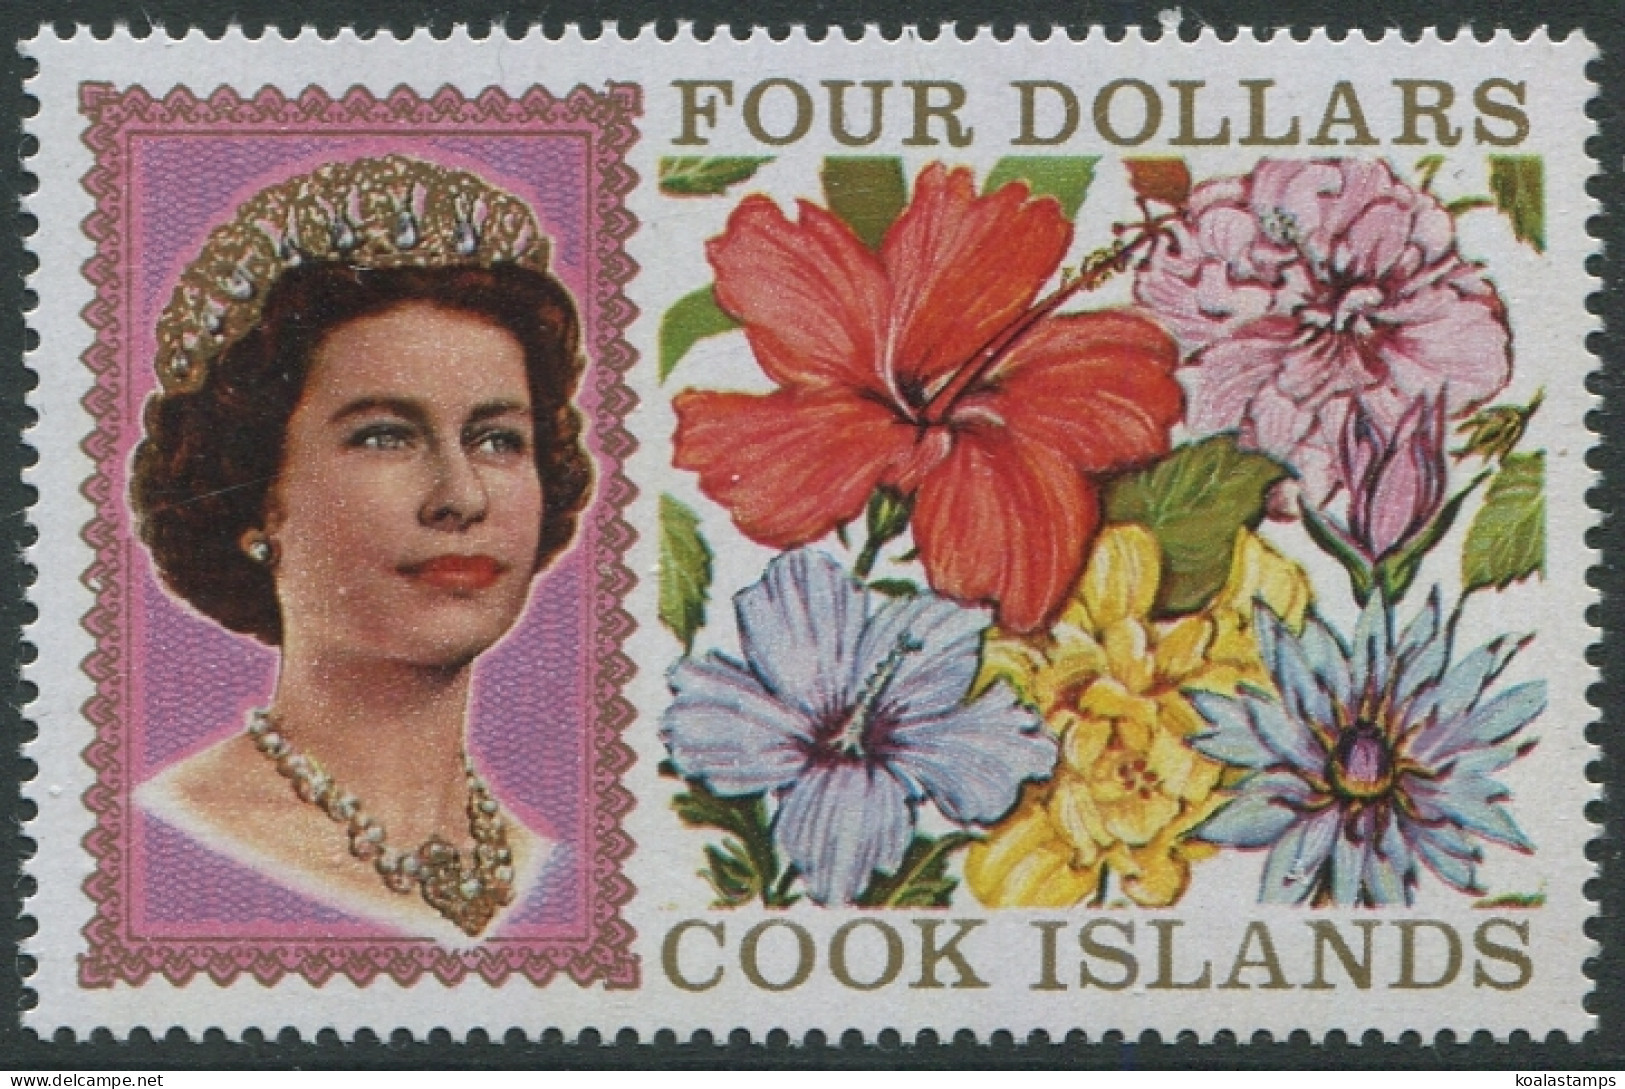 Cook Islands 1967 SG246A $4 QEII Flowers MNH - Cook